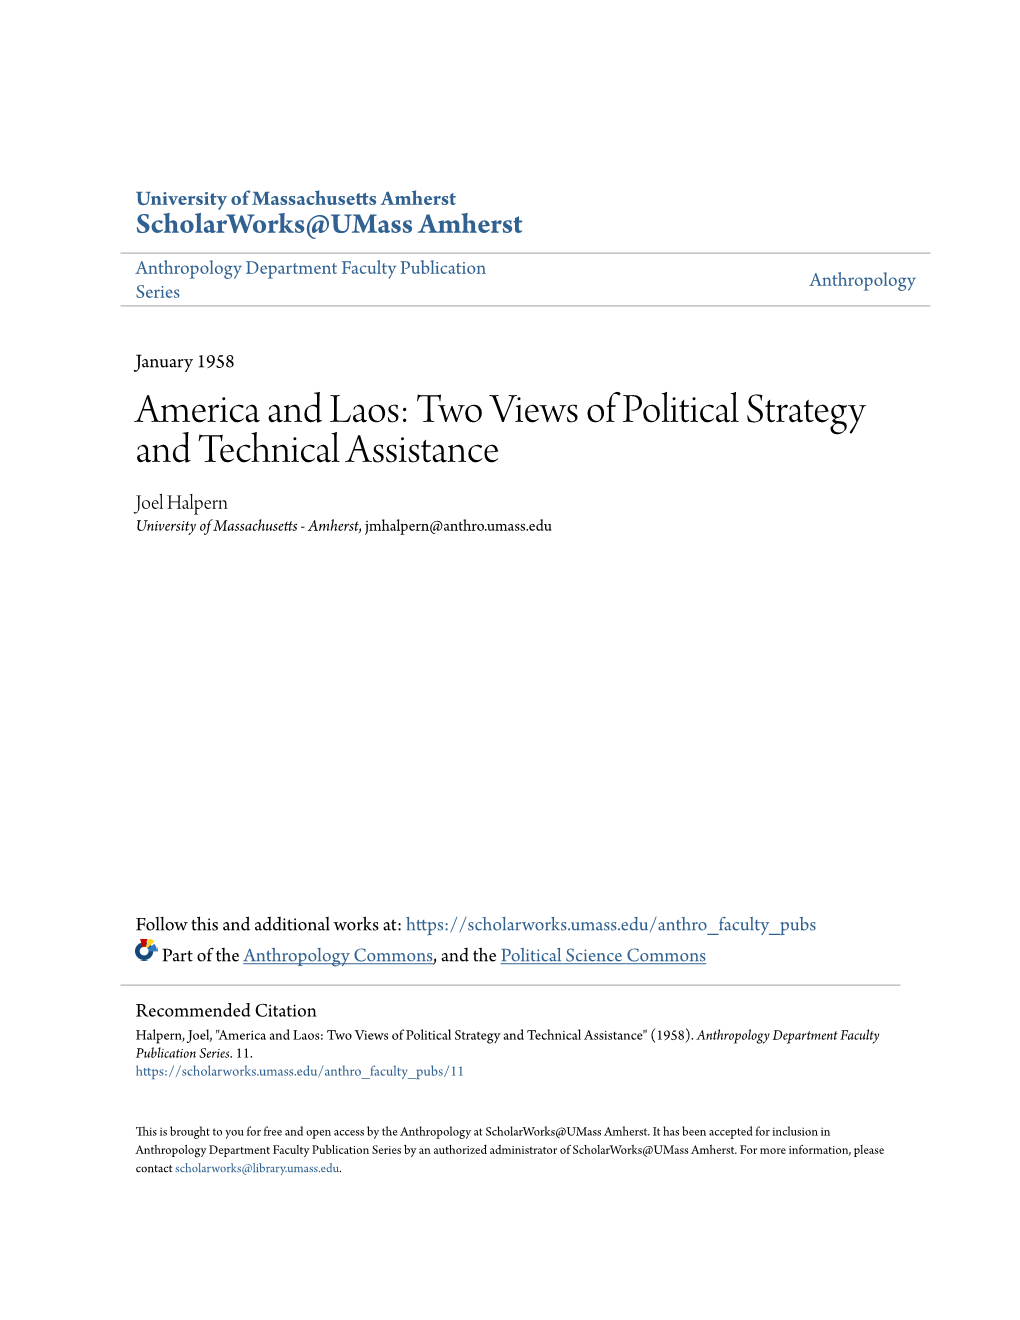 America and Laos: Two Views of Political Strategy and Technical Assistance Joel Halpern University of Massachusetts - Amherst, Jmhalpern@Anthro.Umass.Edu